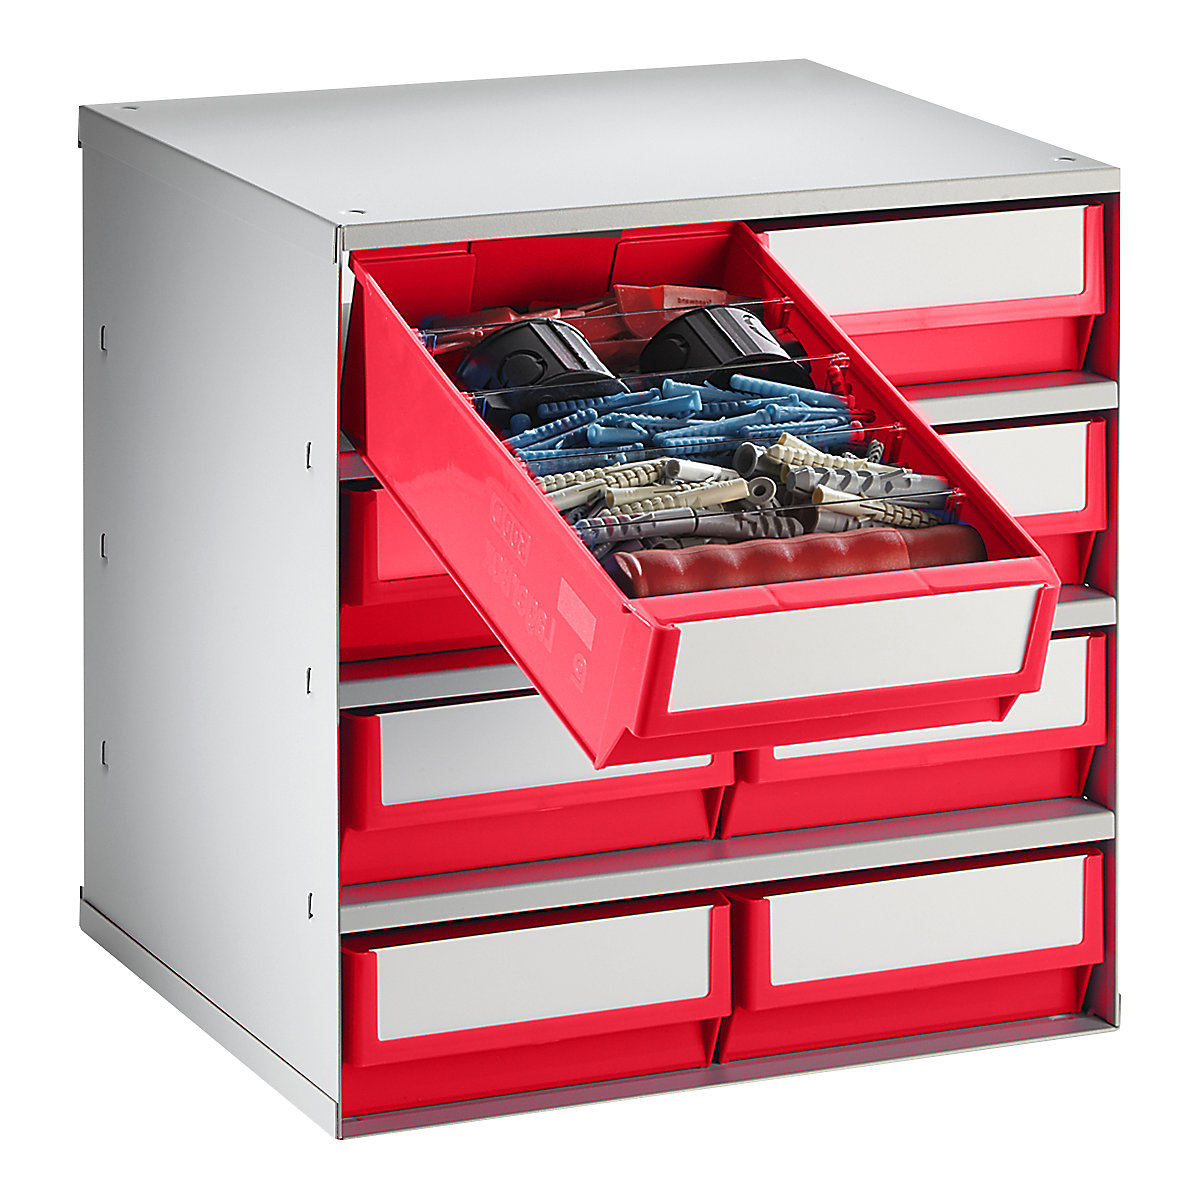 Predalno skladišče, nosilnost ohišja 75 kg, VxŠxG 395 x 376 x 300 mm, 8 predalov, rdeči predali-3